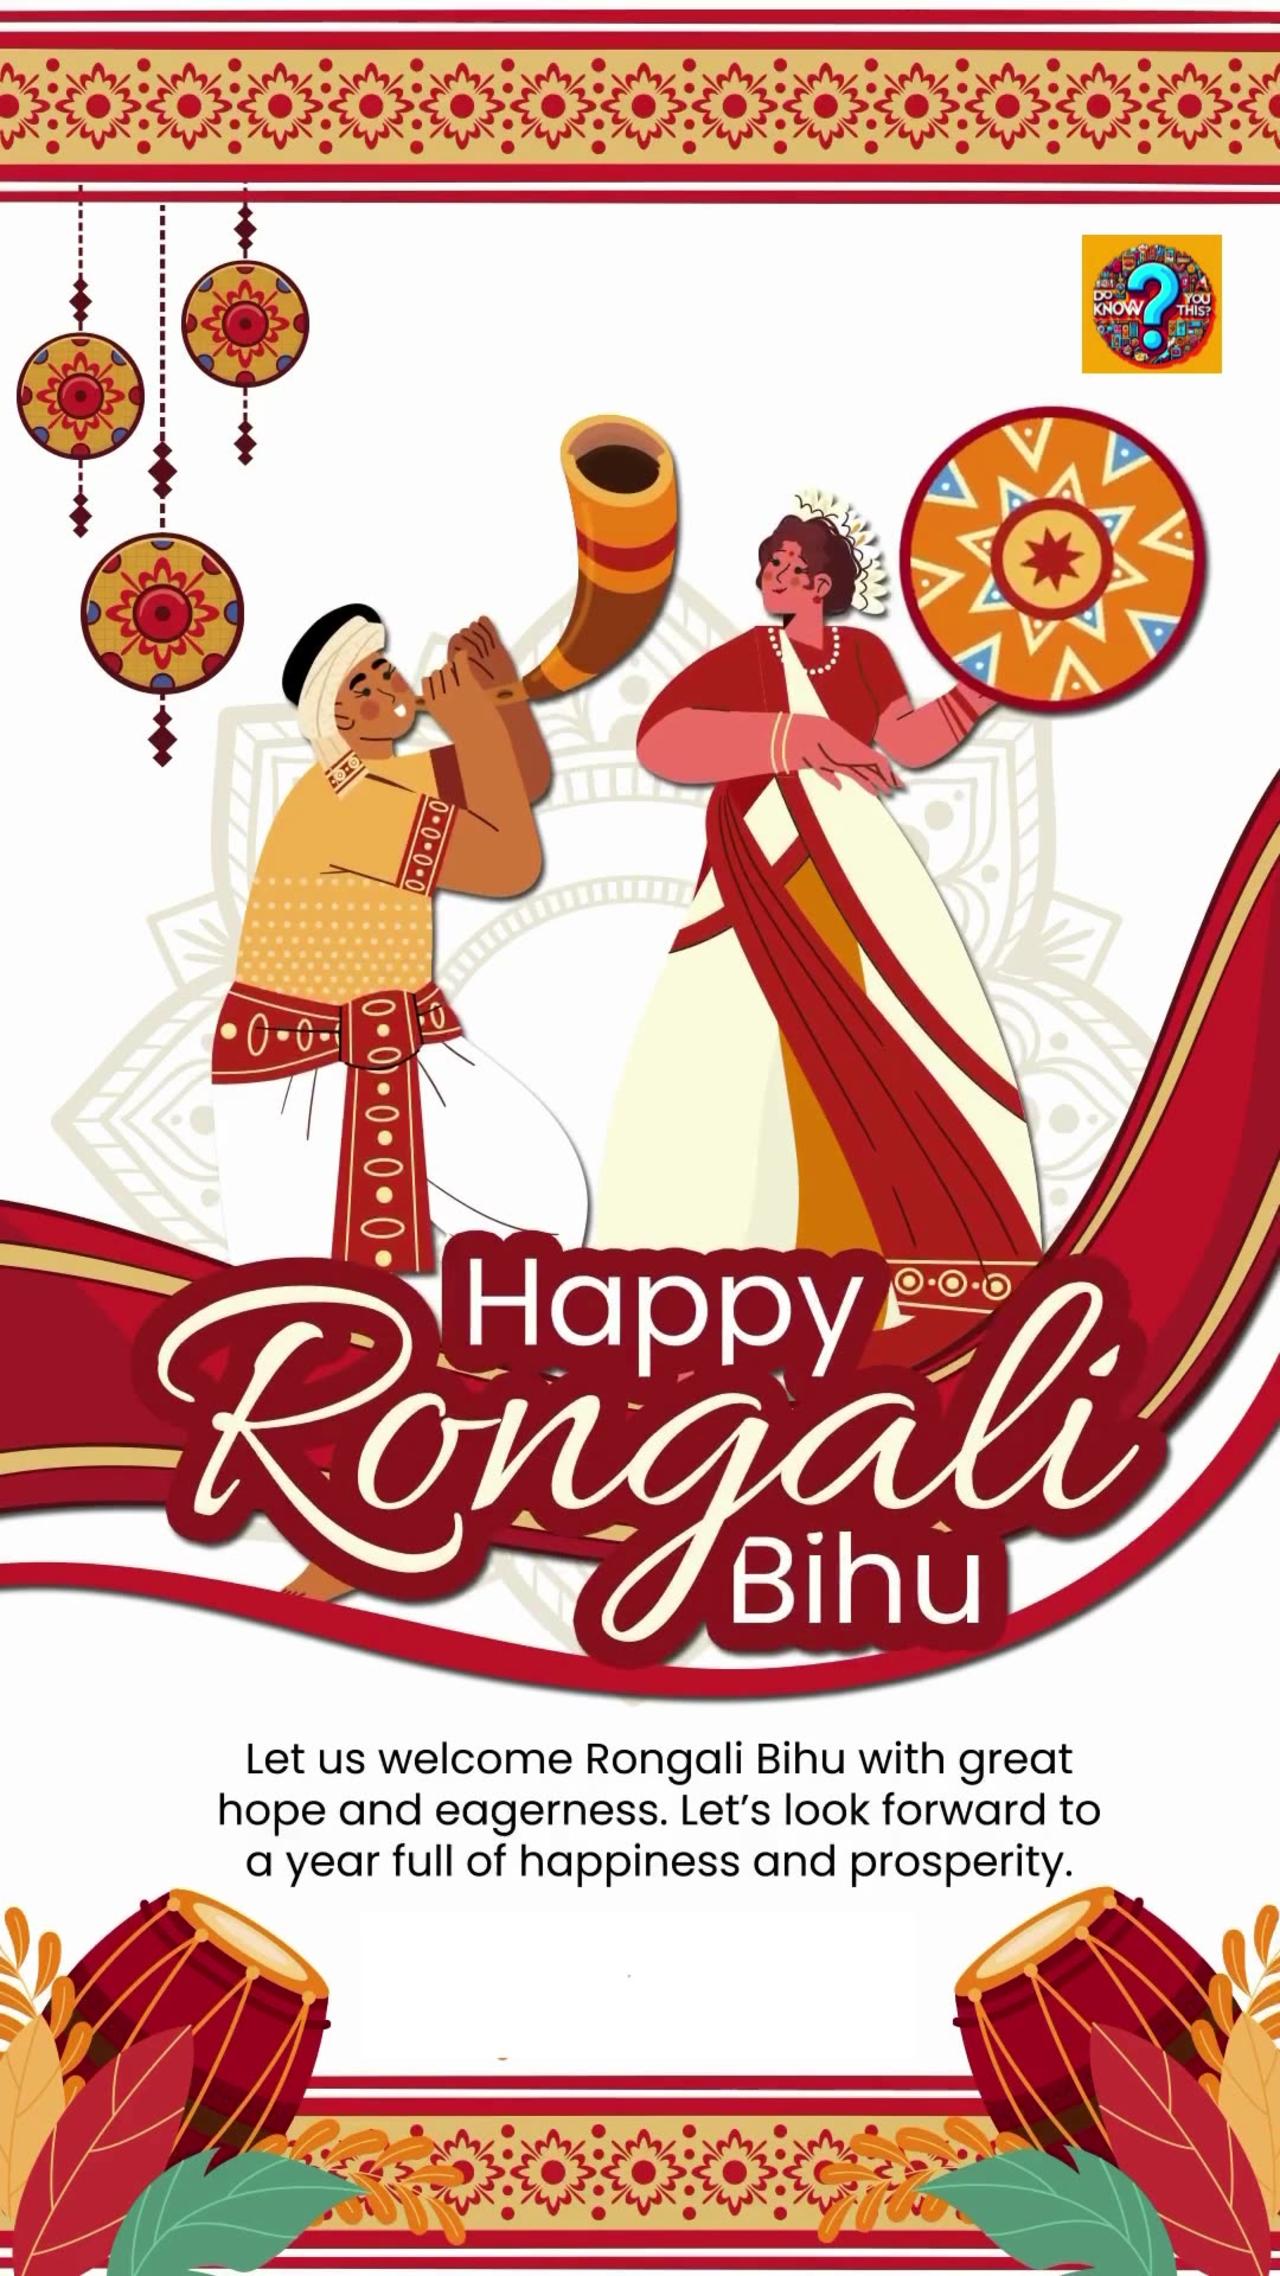 Wishing everyone a joyful Rongali Bihu from us...